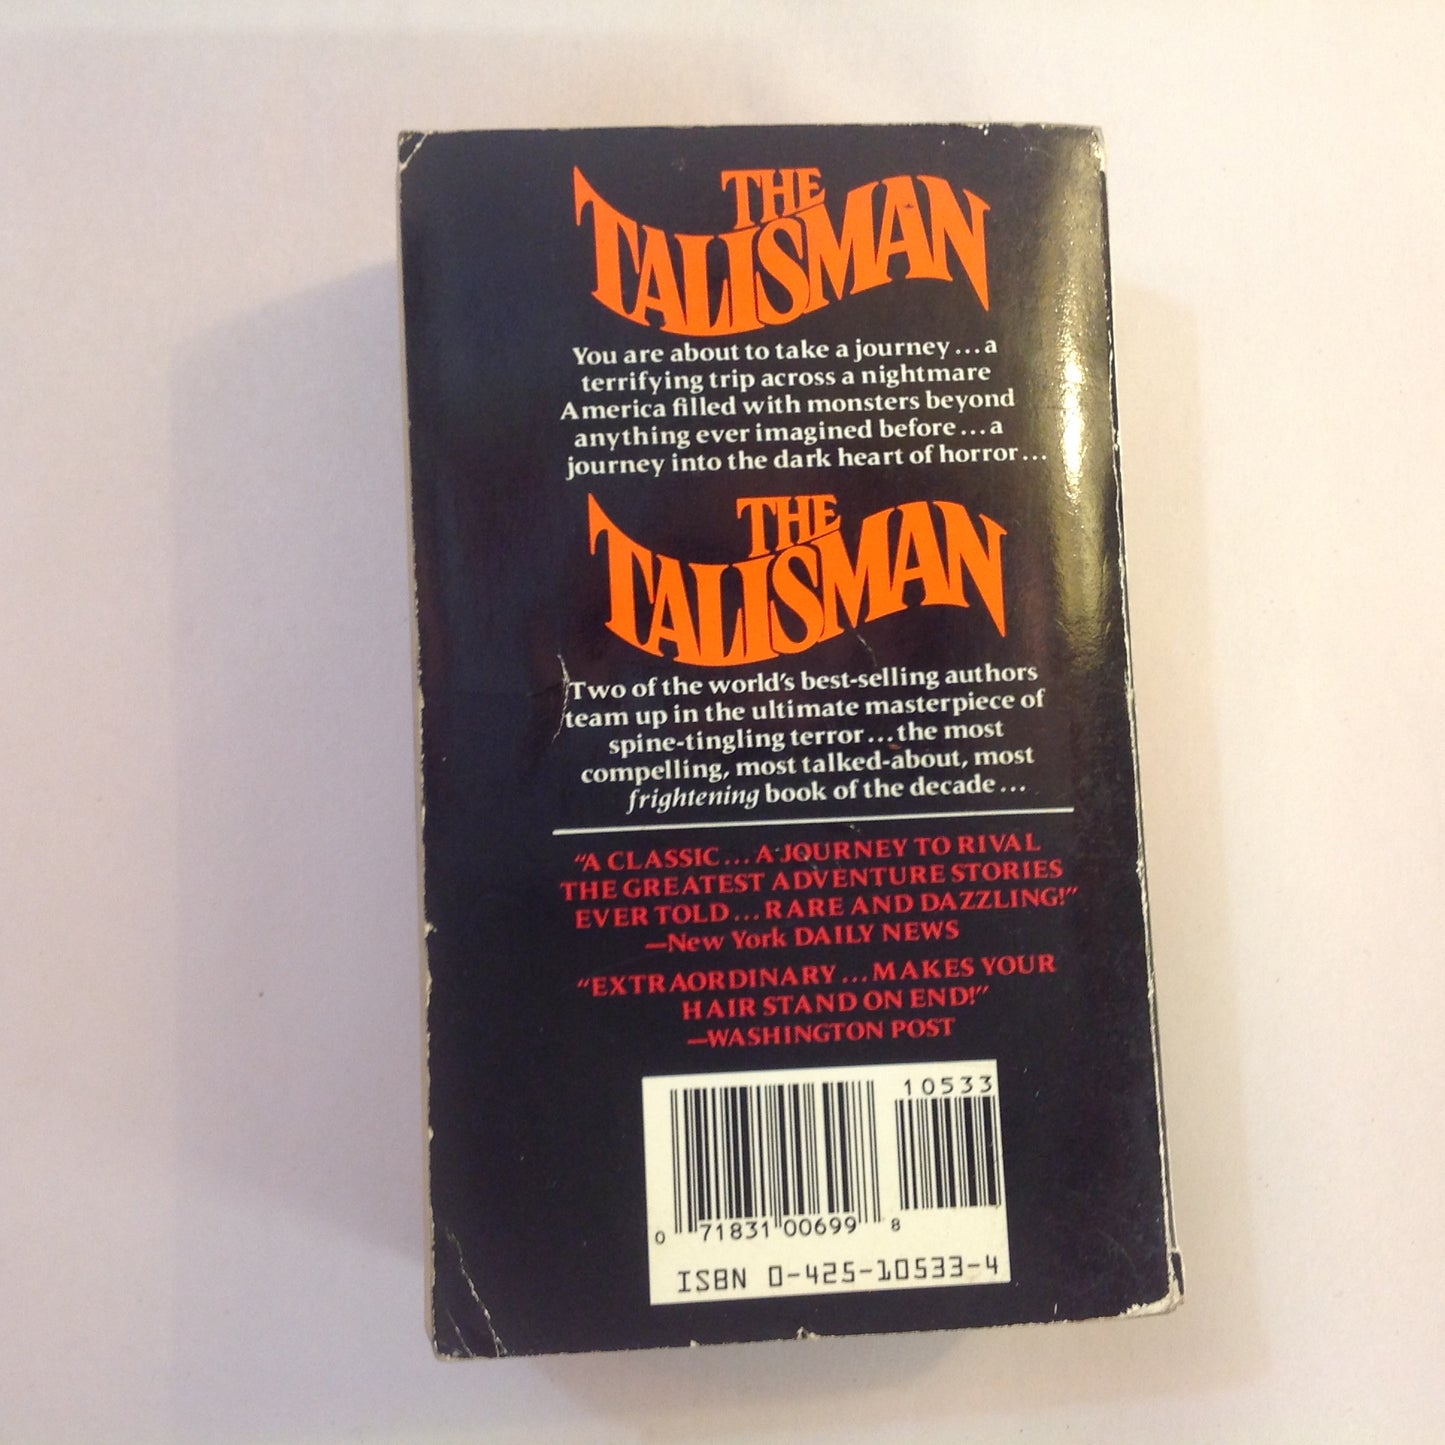 Vintage 1985 Mass Market Paperback The Talisman Stephen King Peter Straub